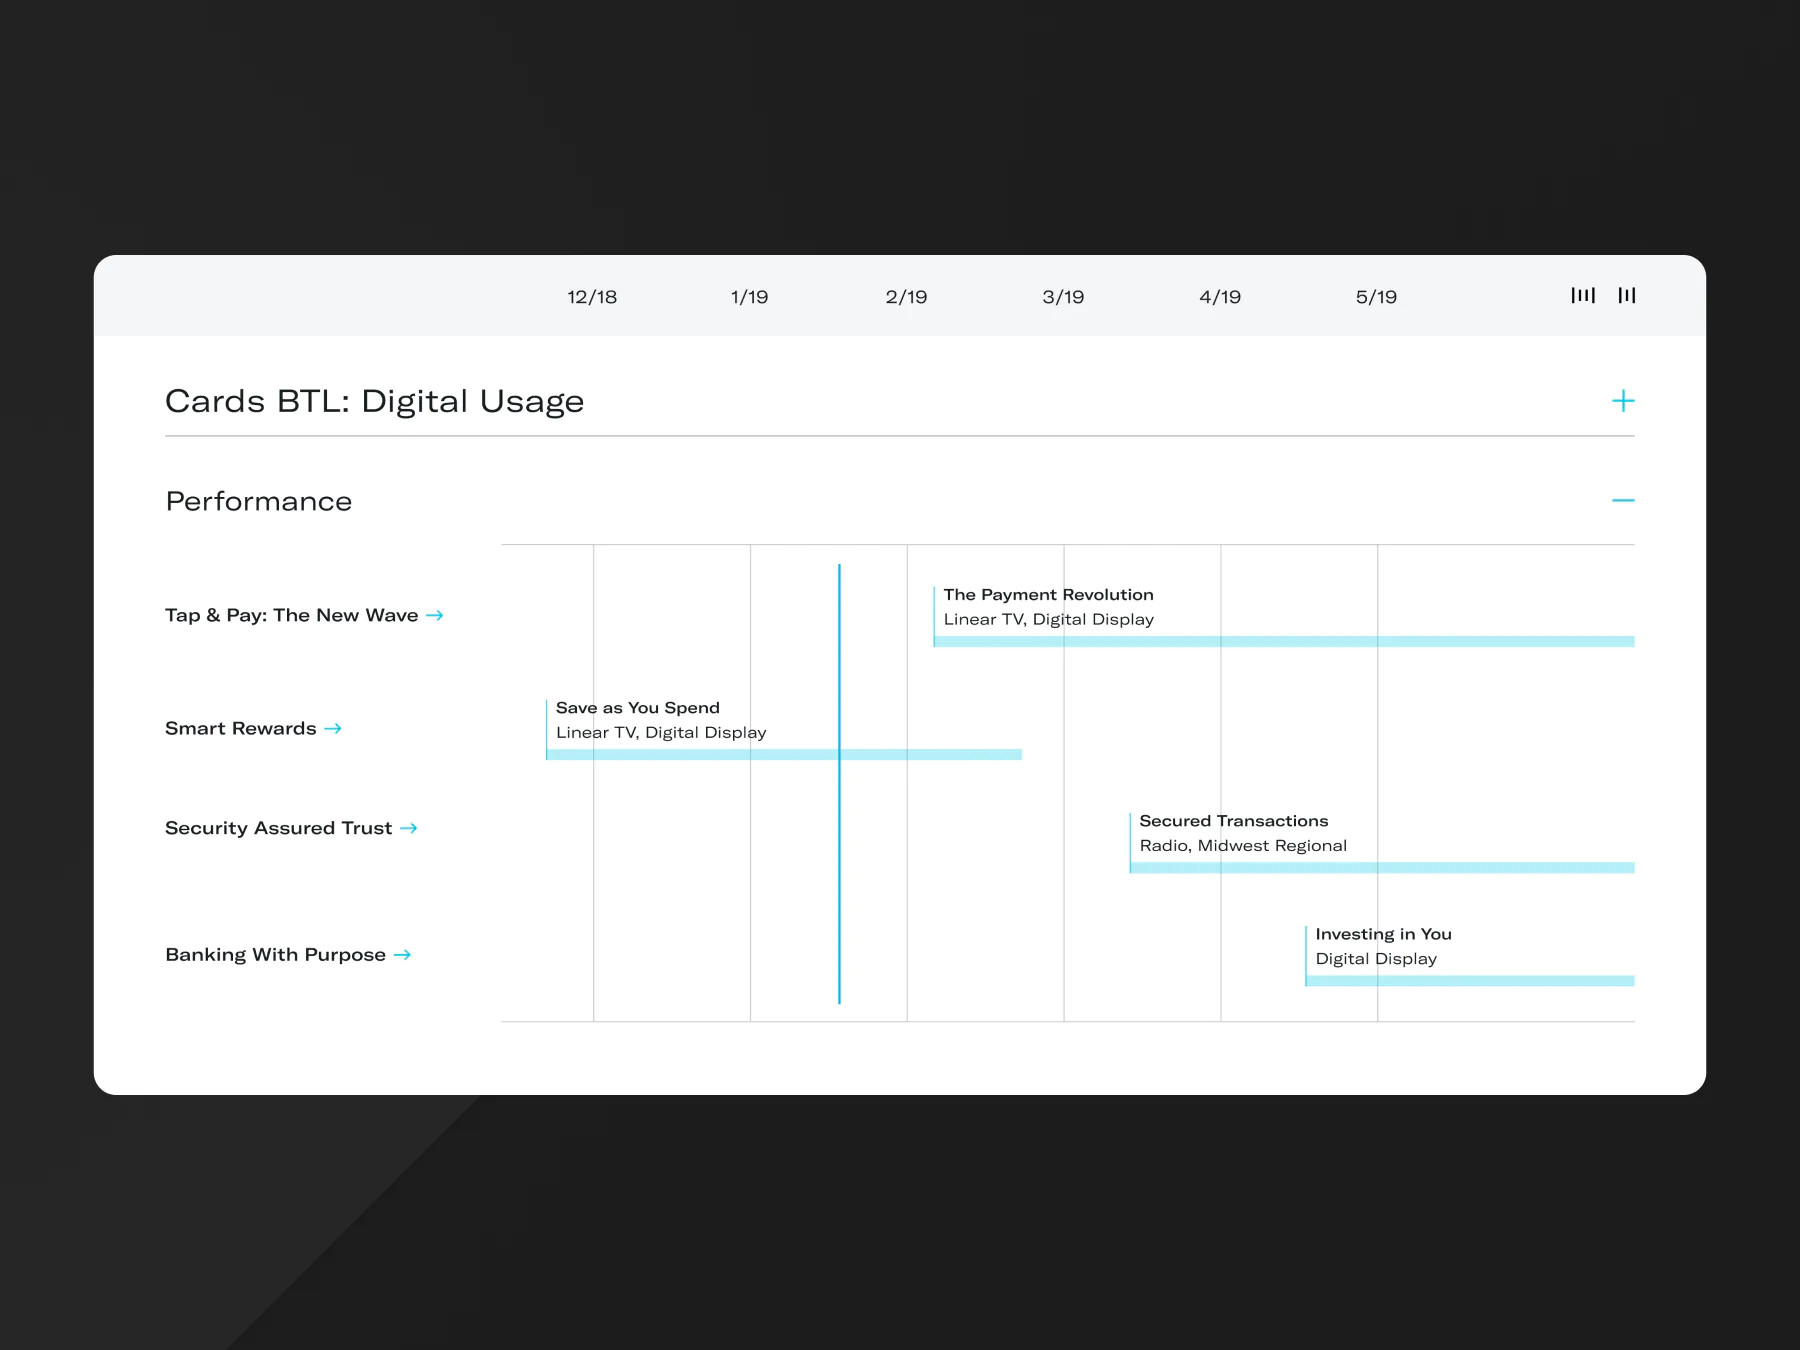 Project management tool showing a timeline of campaigns for Cards BTL, Digital Usage.